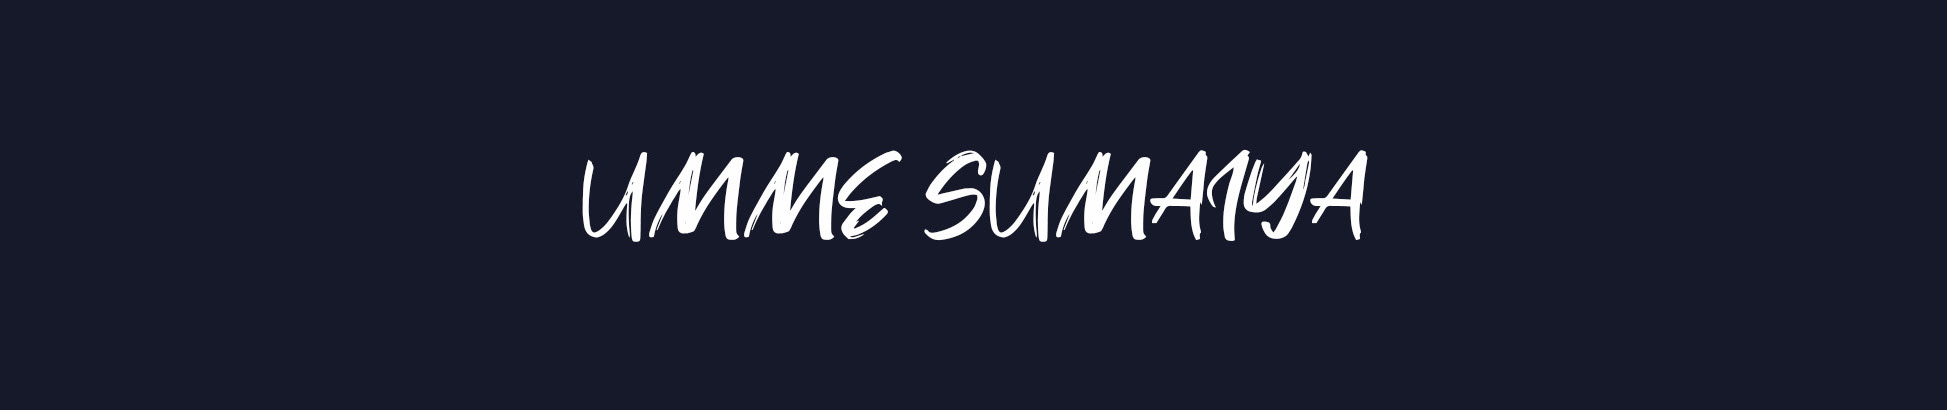 Umme Sumaiya's profile banner